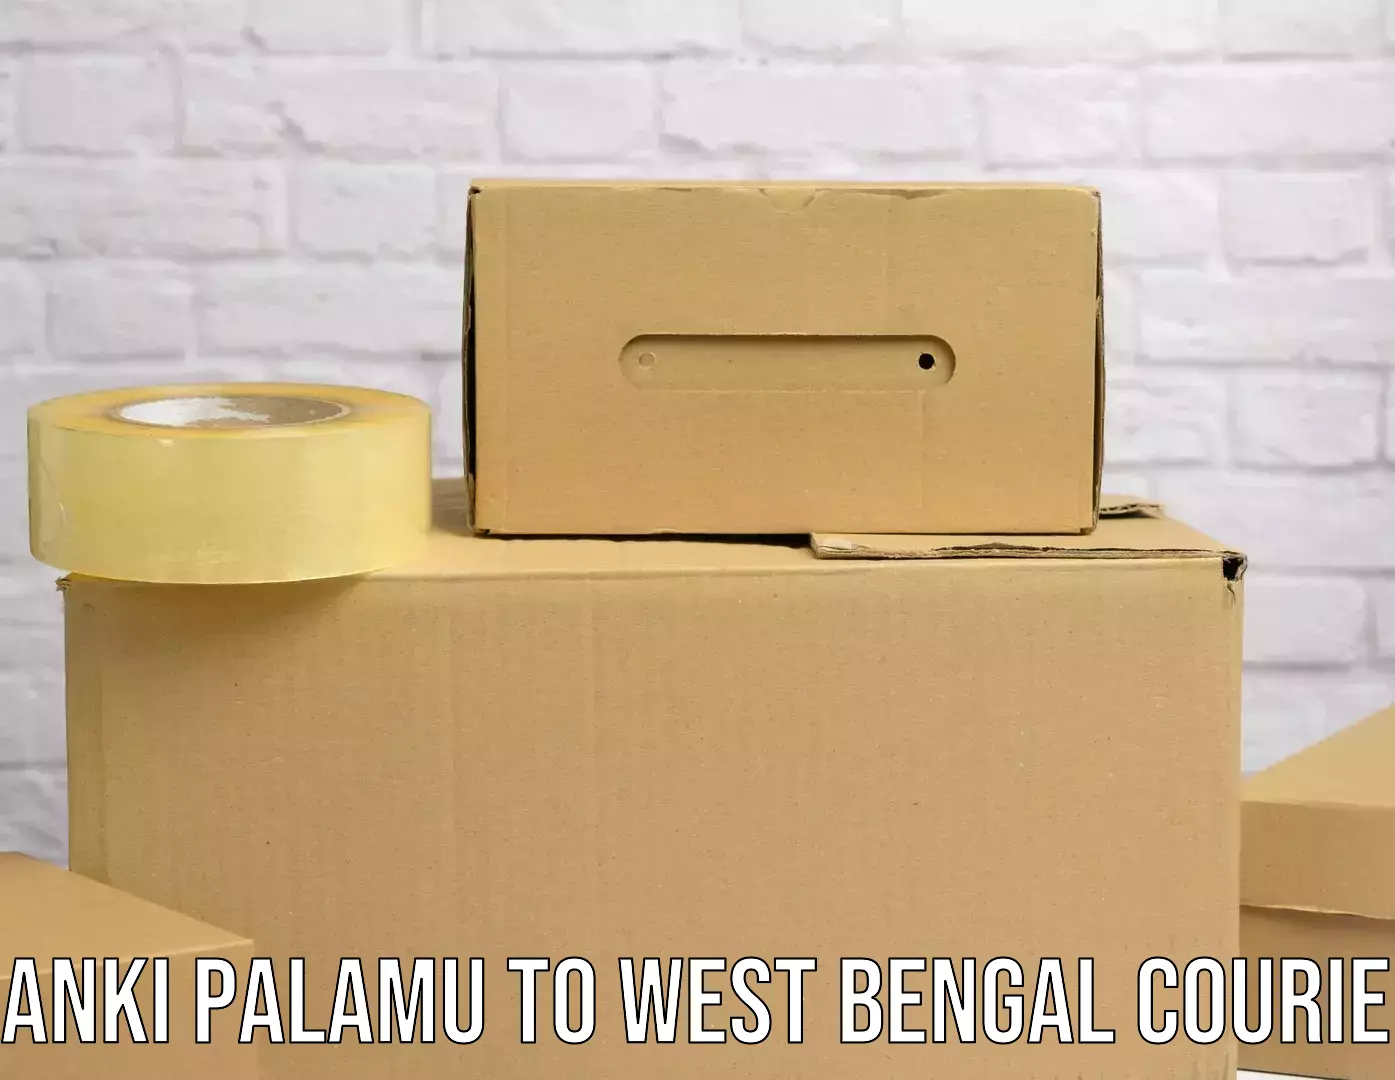 High-performance logistics Panki Palamu to West Bengal